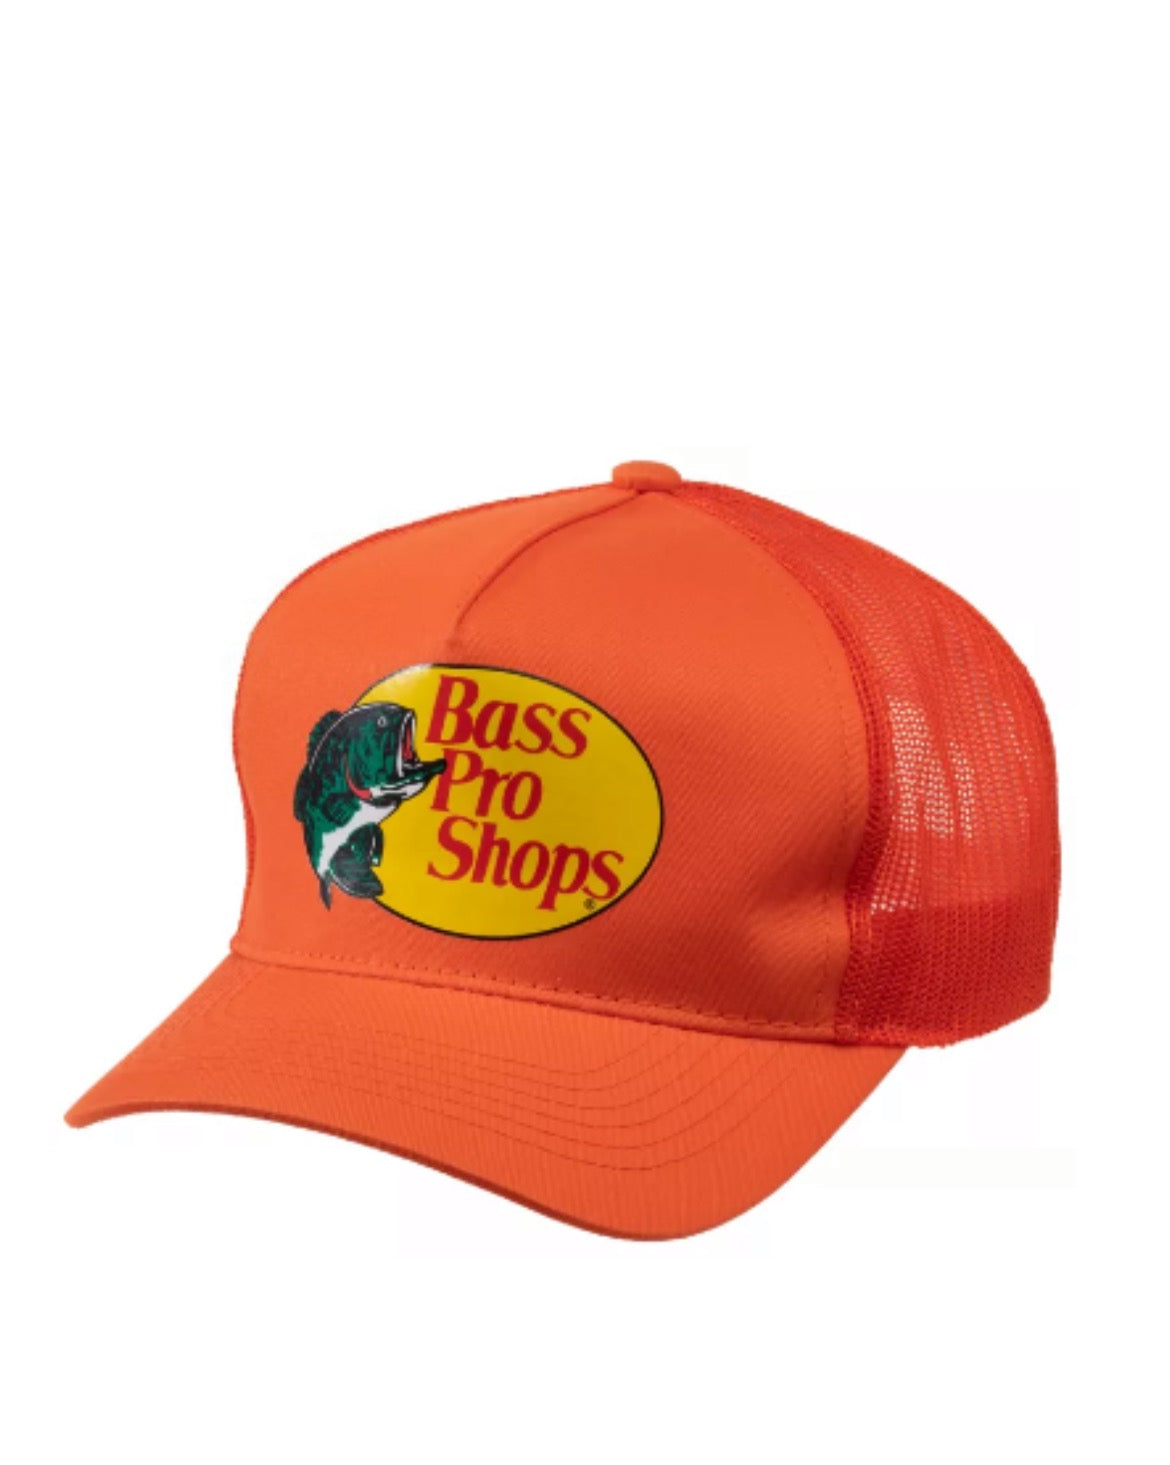 Bass Pro Shops Mesh Cap Orange